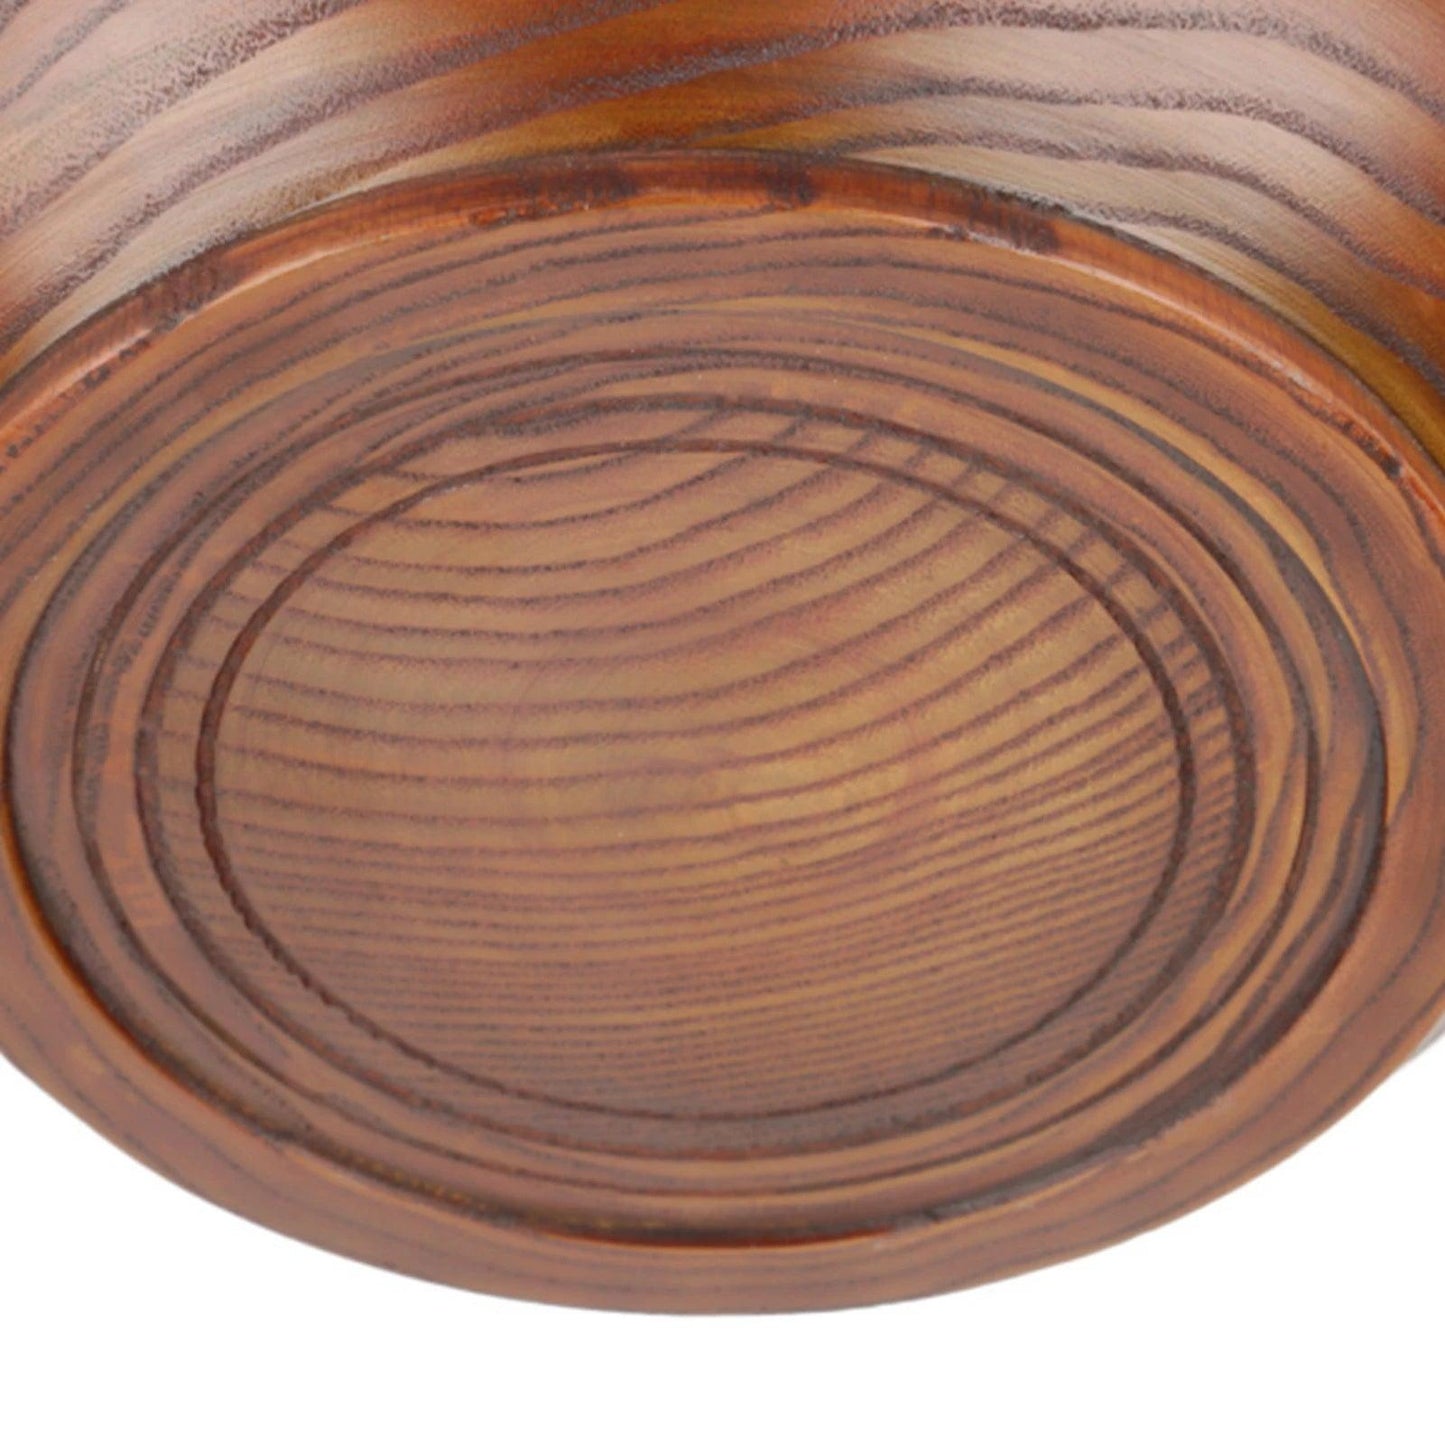 Wooden Yarn Bowl - L & M Kee, LLC